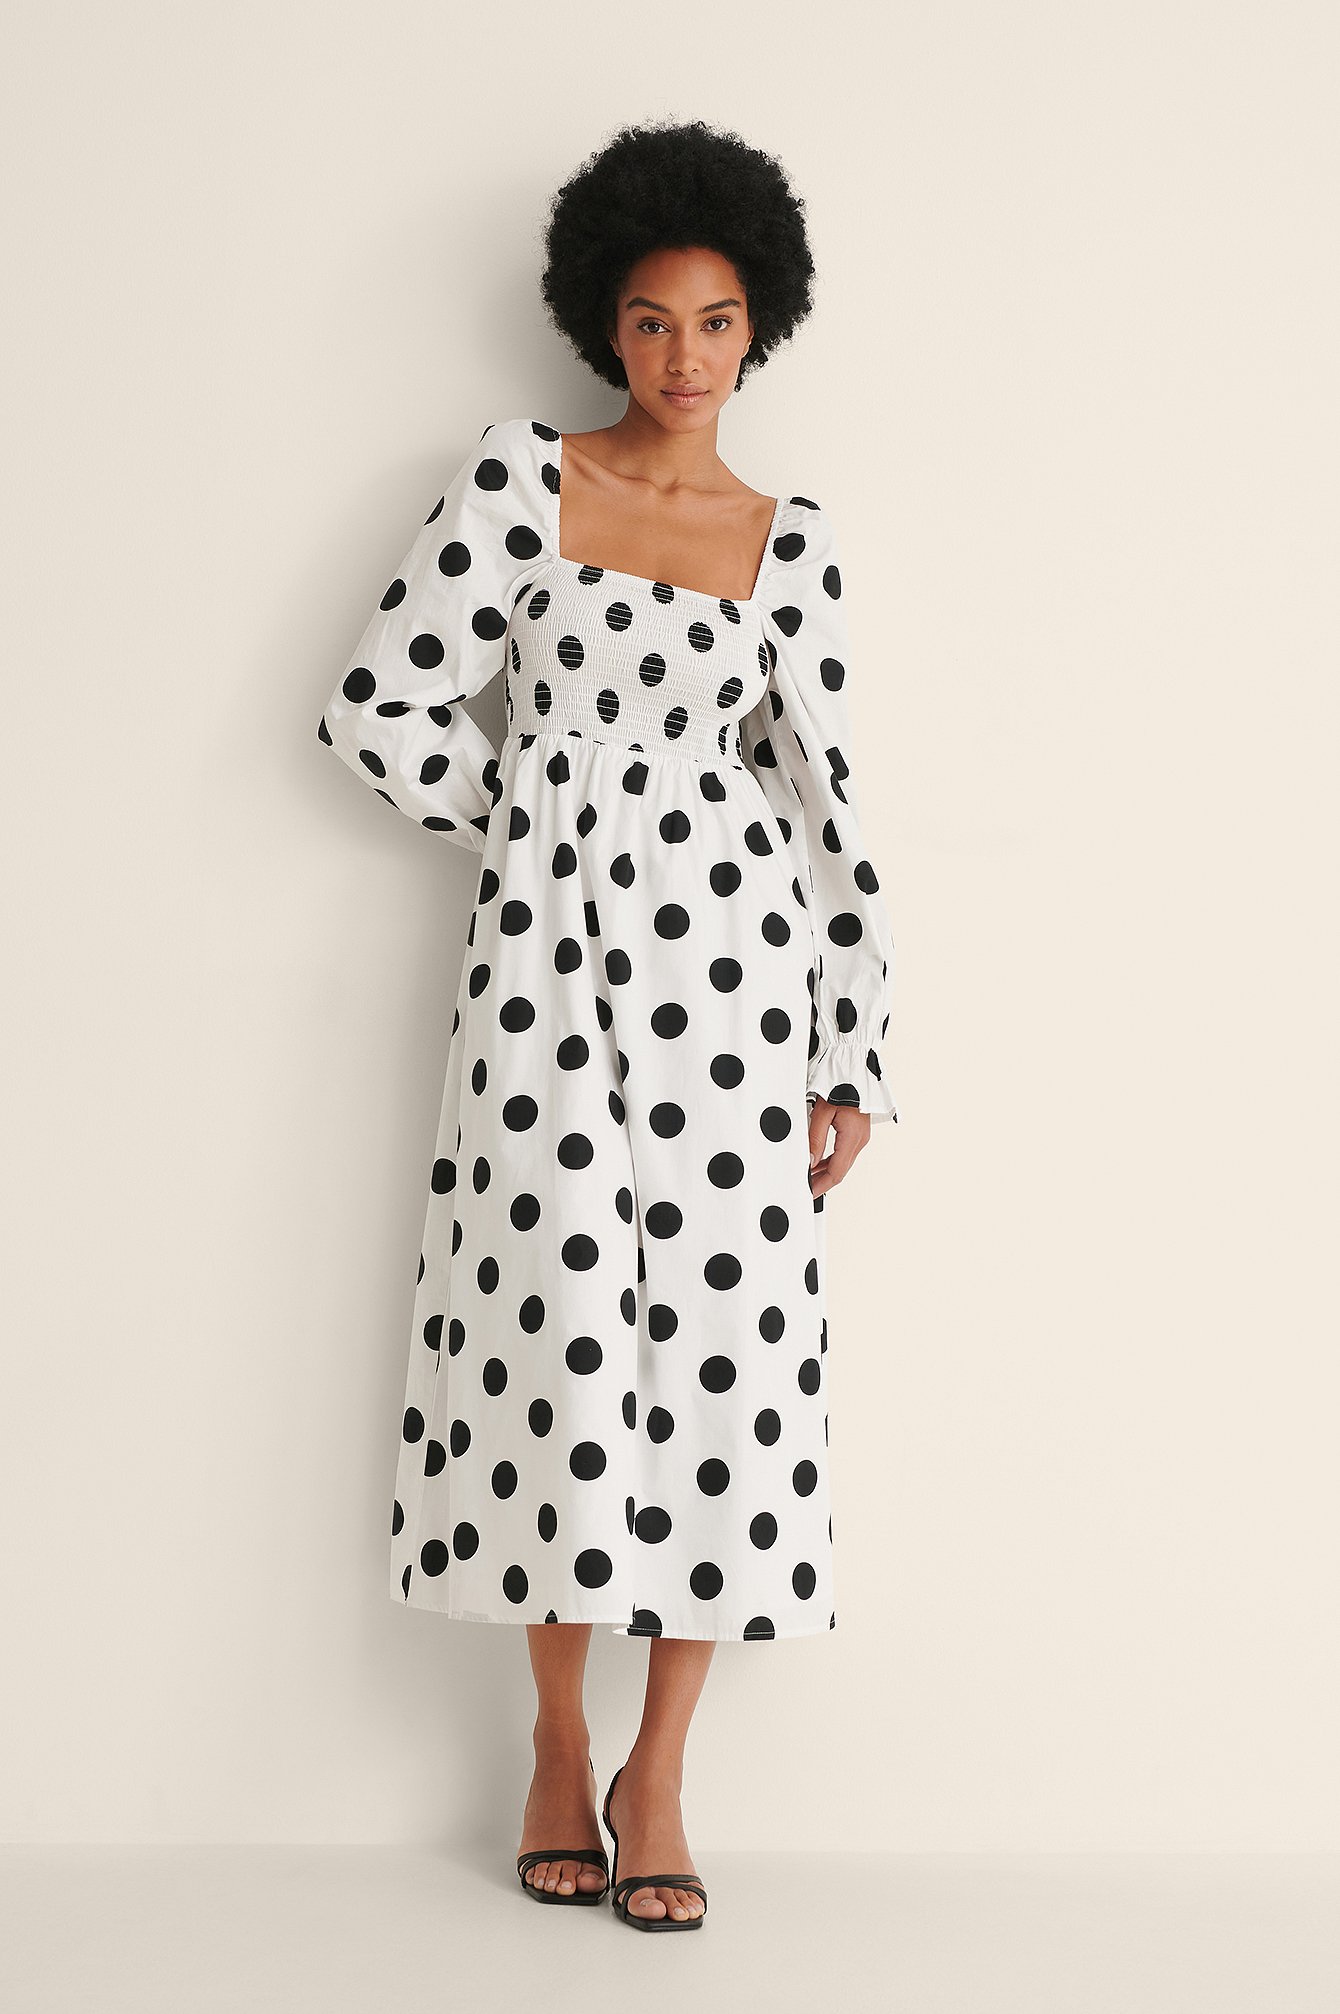 Aanstellen erger maken Voorman Polka dot dresses | Shop dotted dresses online | NA-KD